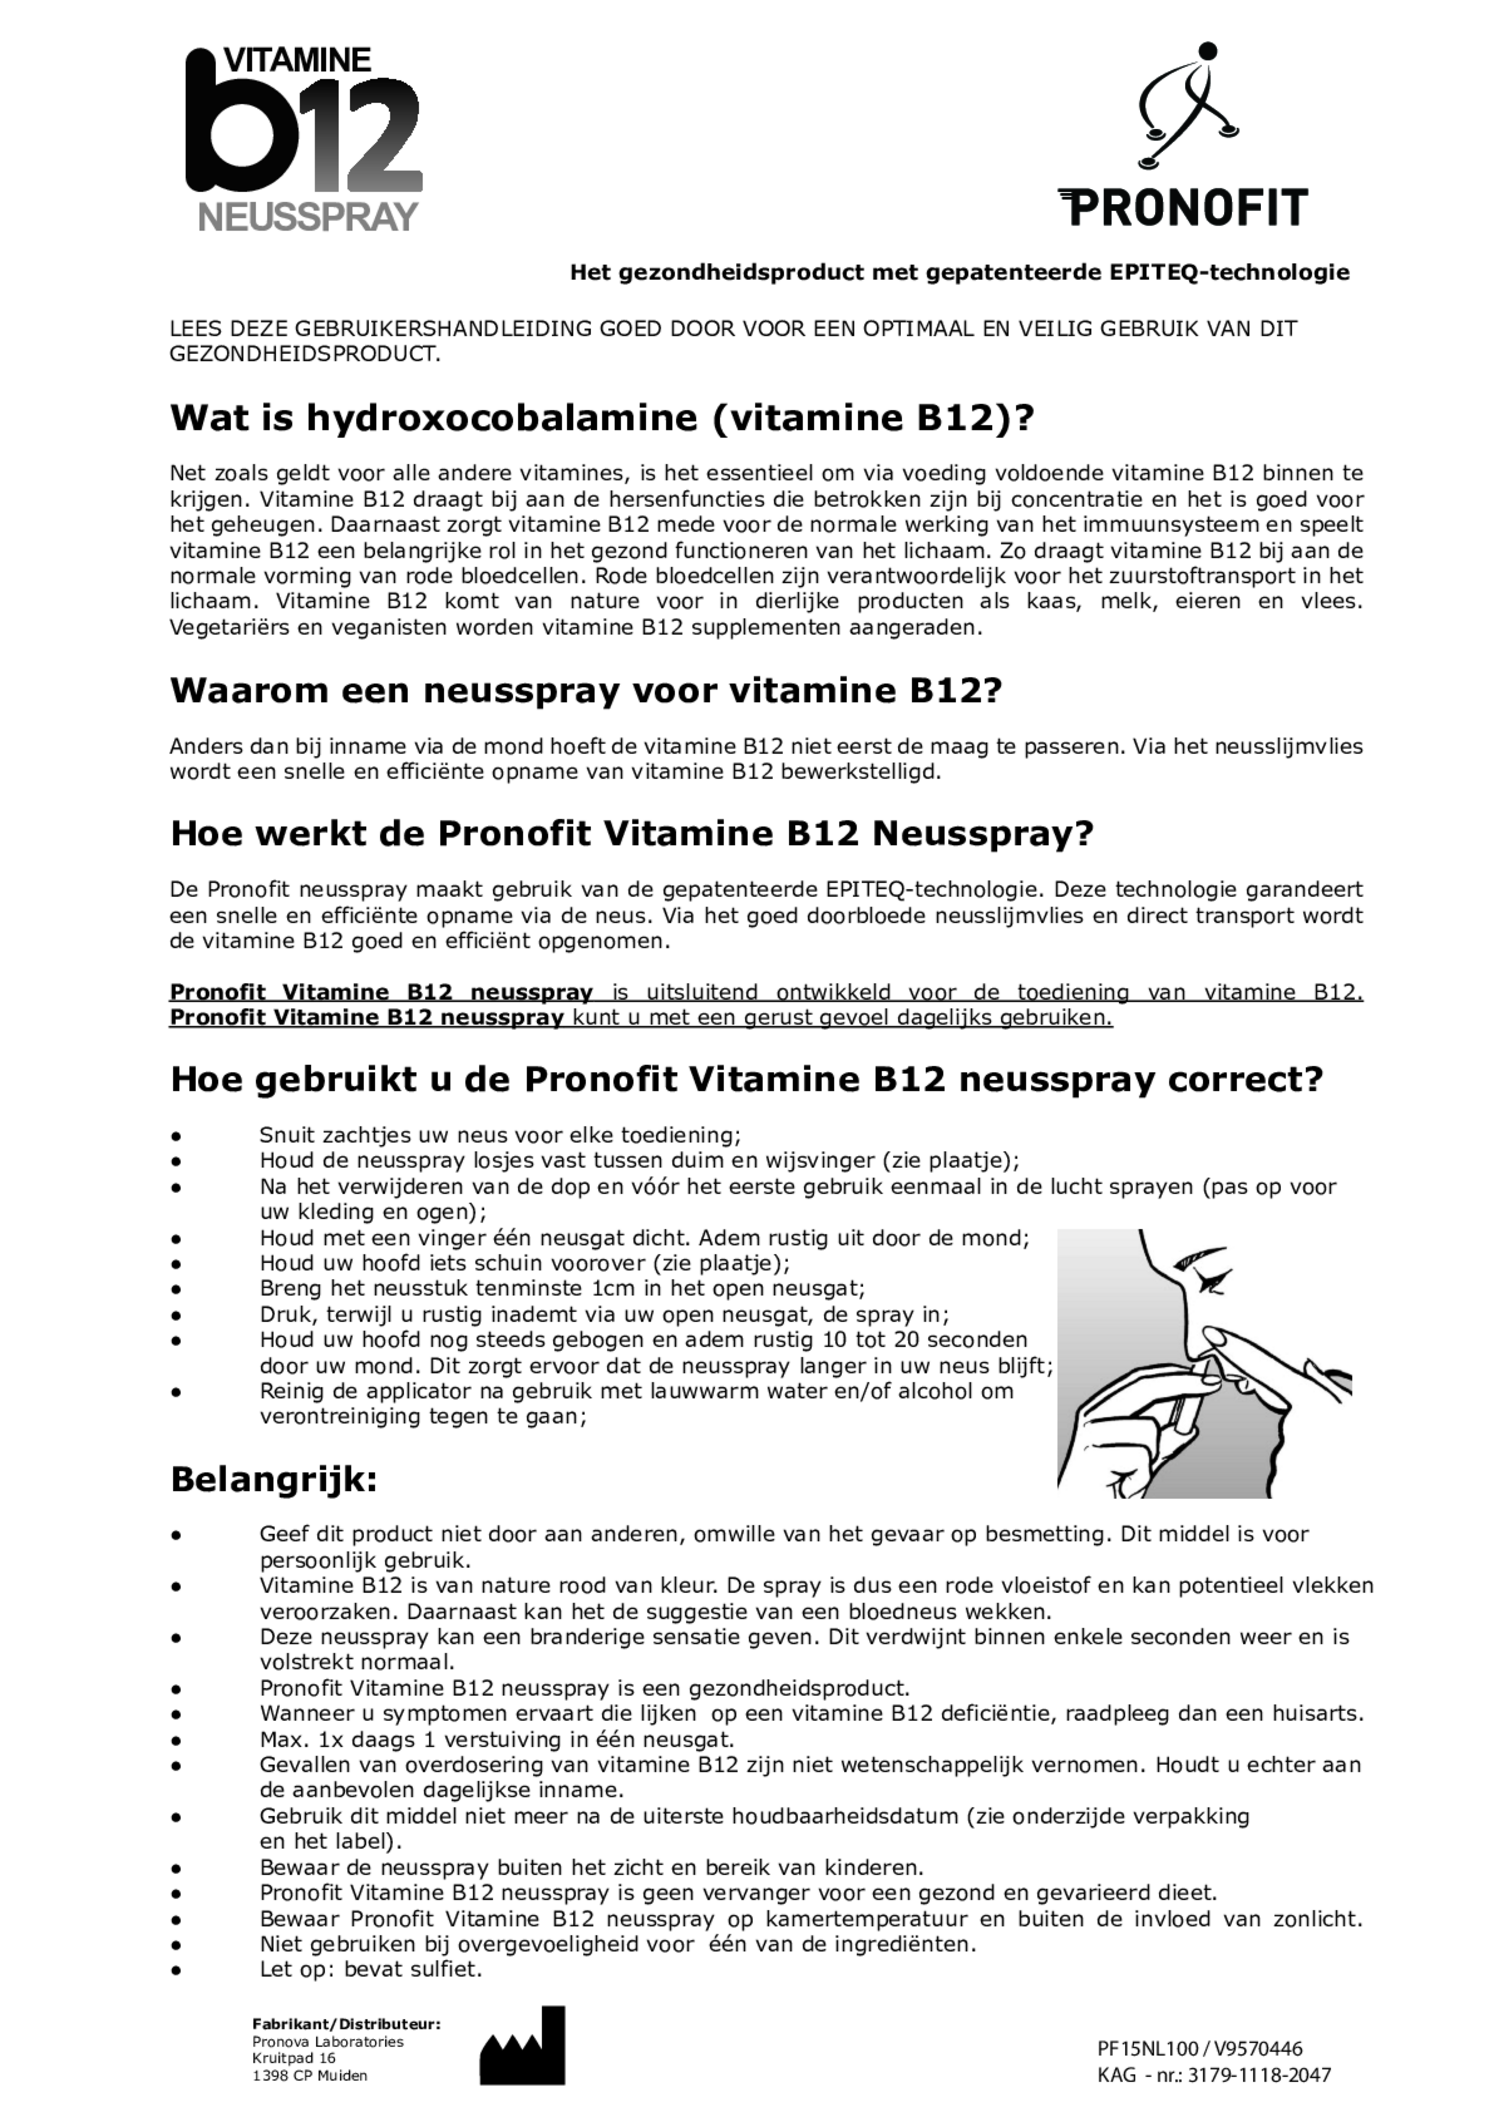 Vitamine B12 Neusspray afbeelding van document #1, gebruiksaanwijzing